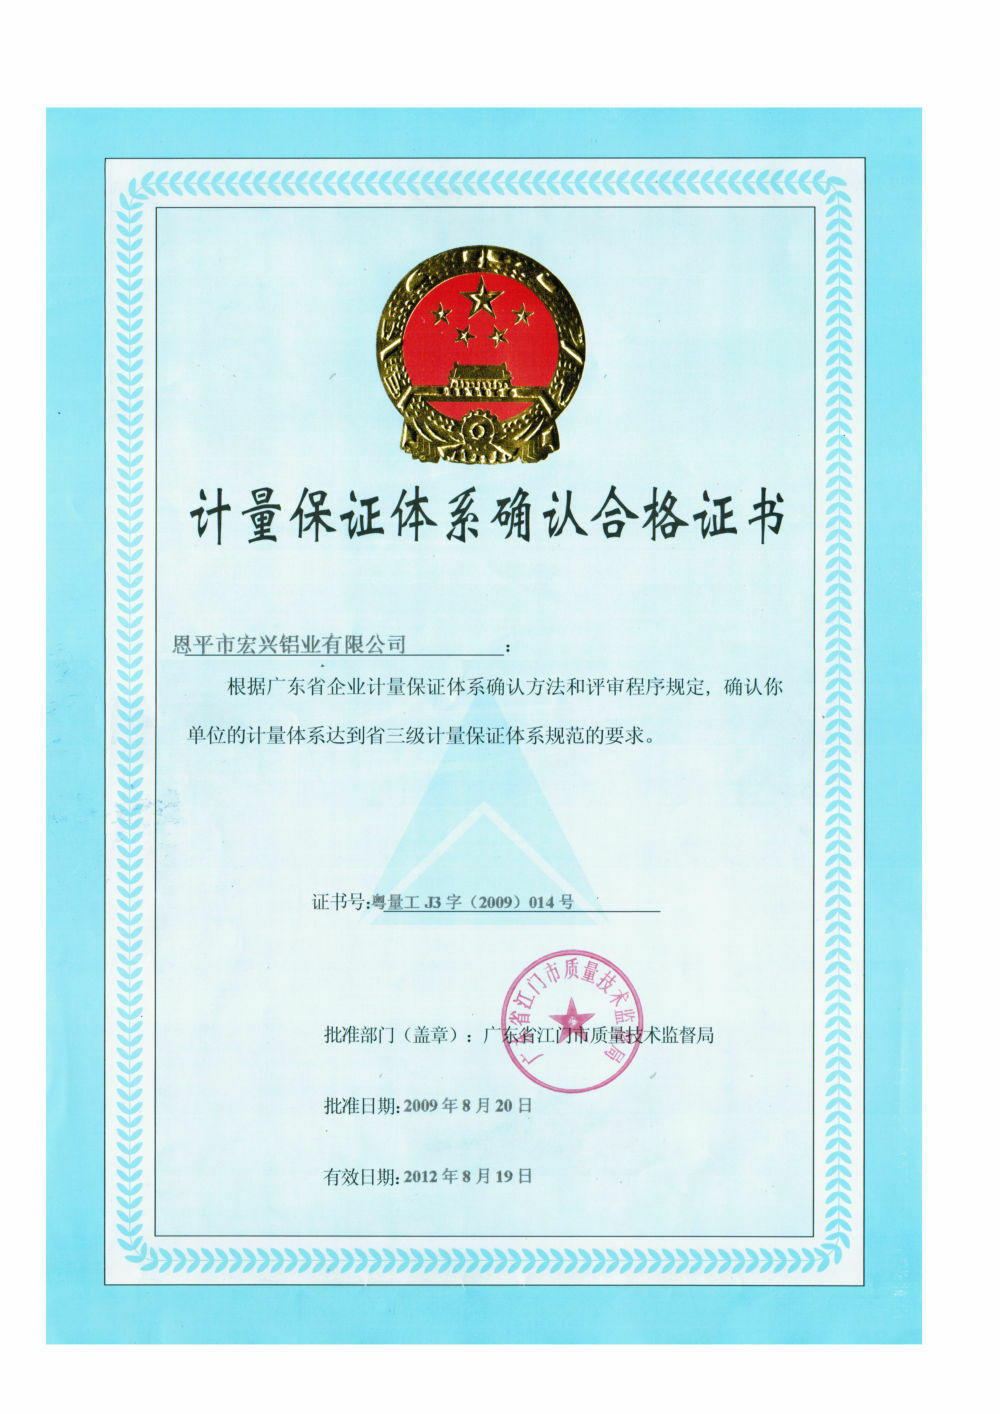 Measurement assurance confirmation certificate